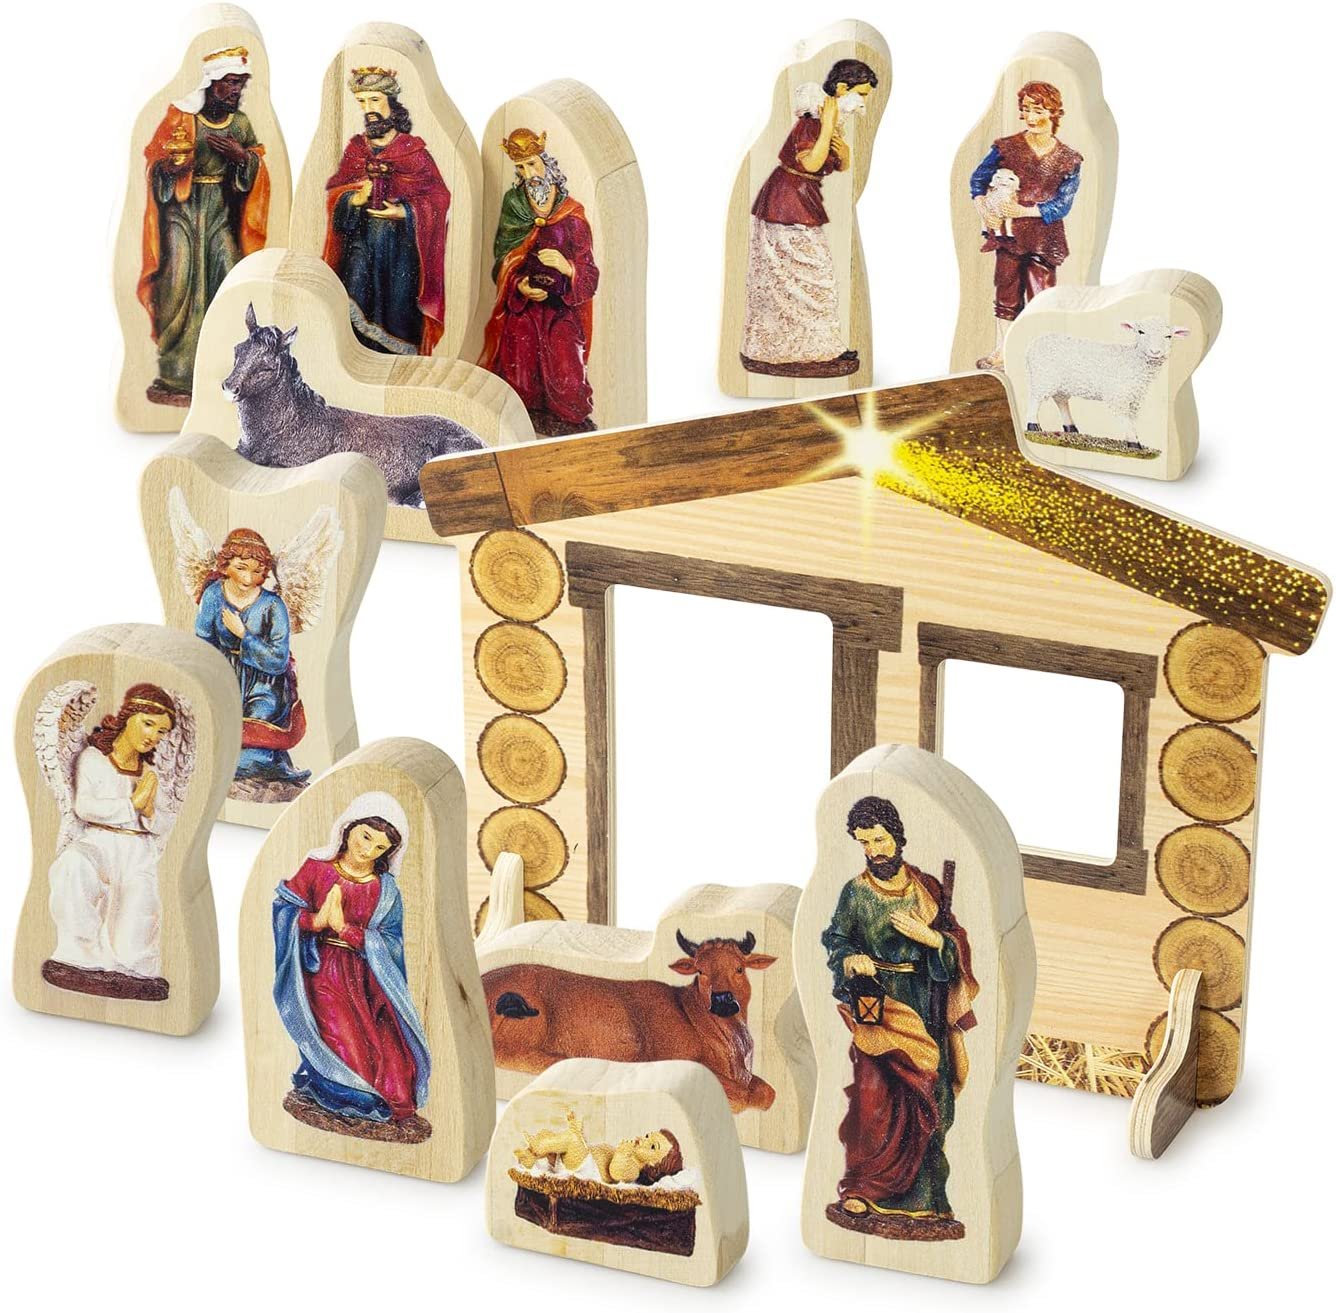 Ulanik Souvenir 14 Piece Wooden Nativity Scene Set Home Decoration Collection Indoor Christmas Story Decoration